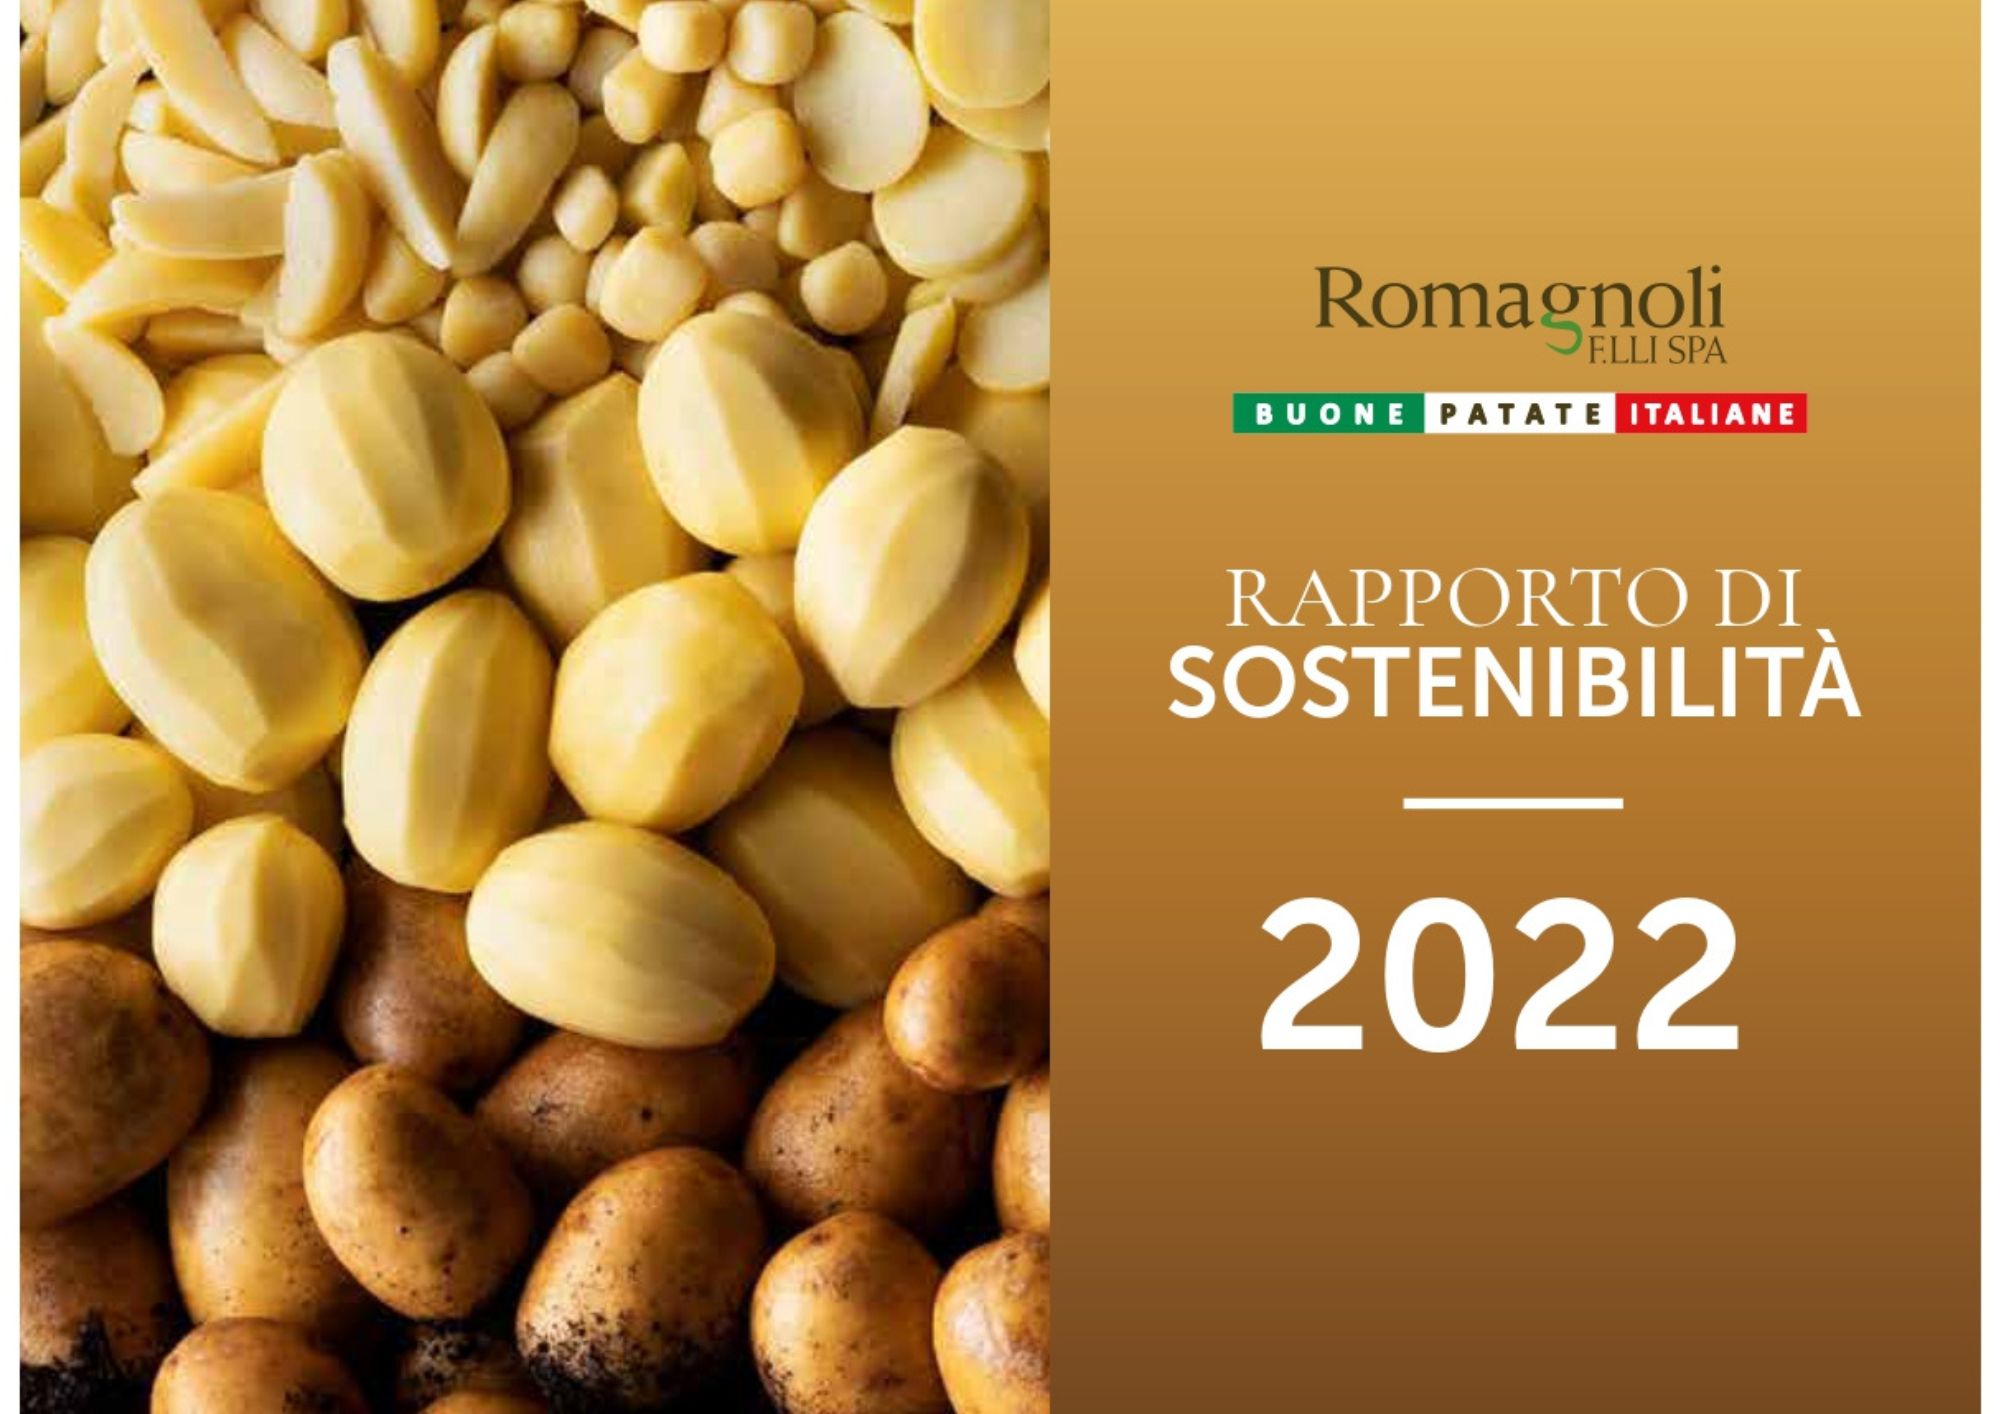 Romagnoli F.lli presents its third Sustainability Report